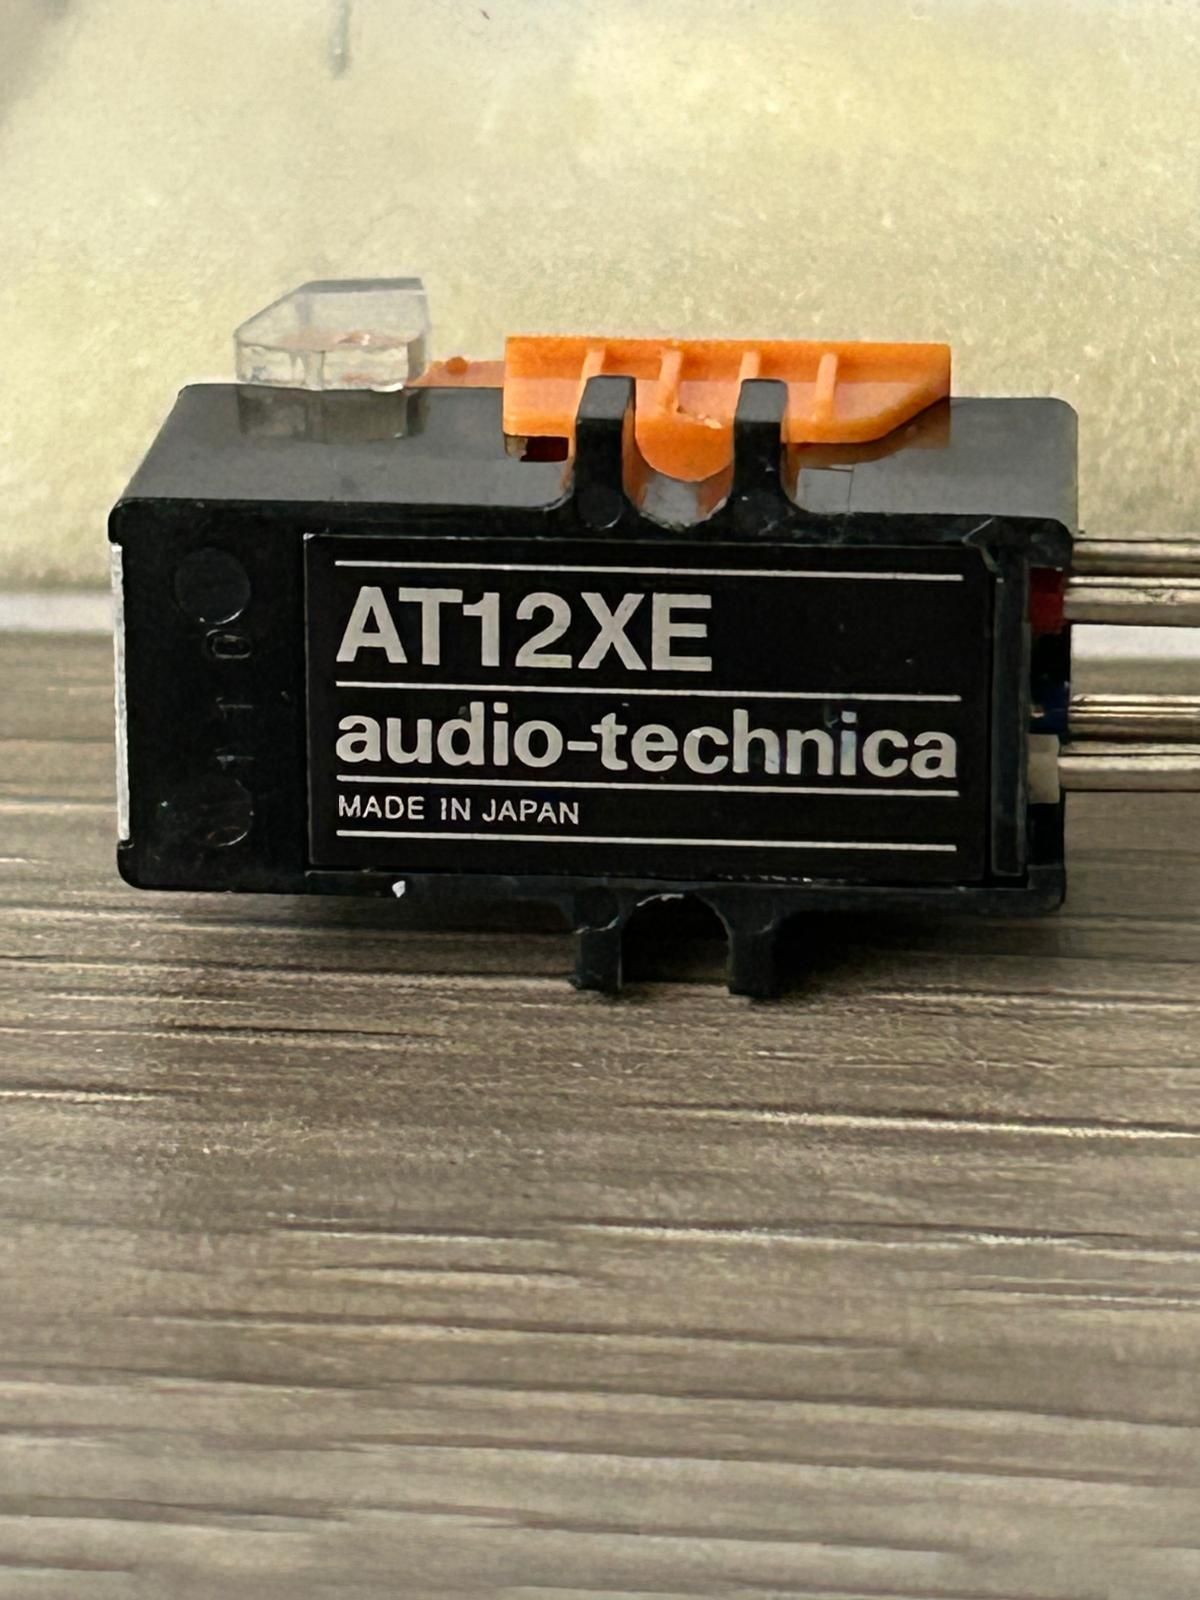 Audiotechnica at 12xe ( teac onkyo sony revox)